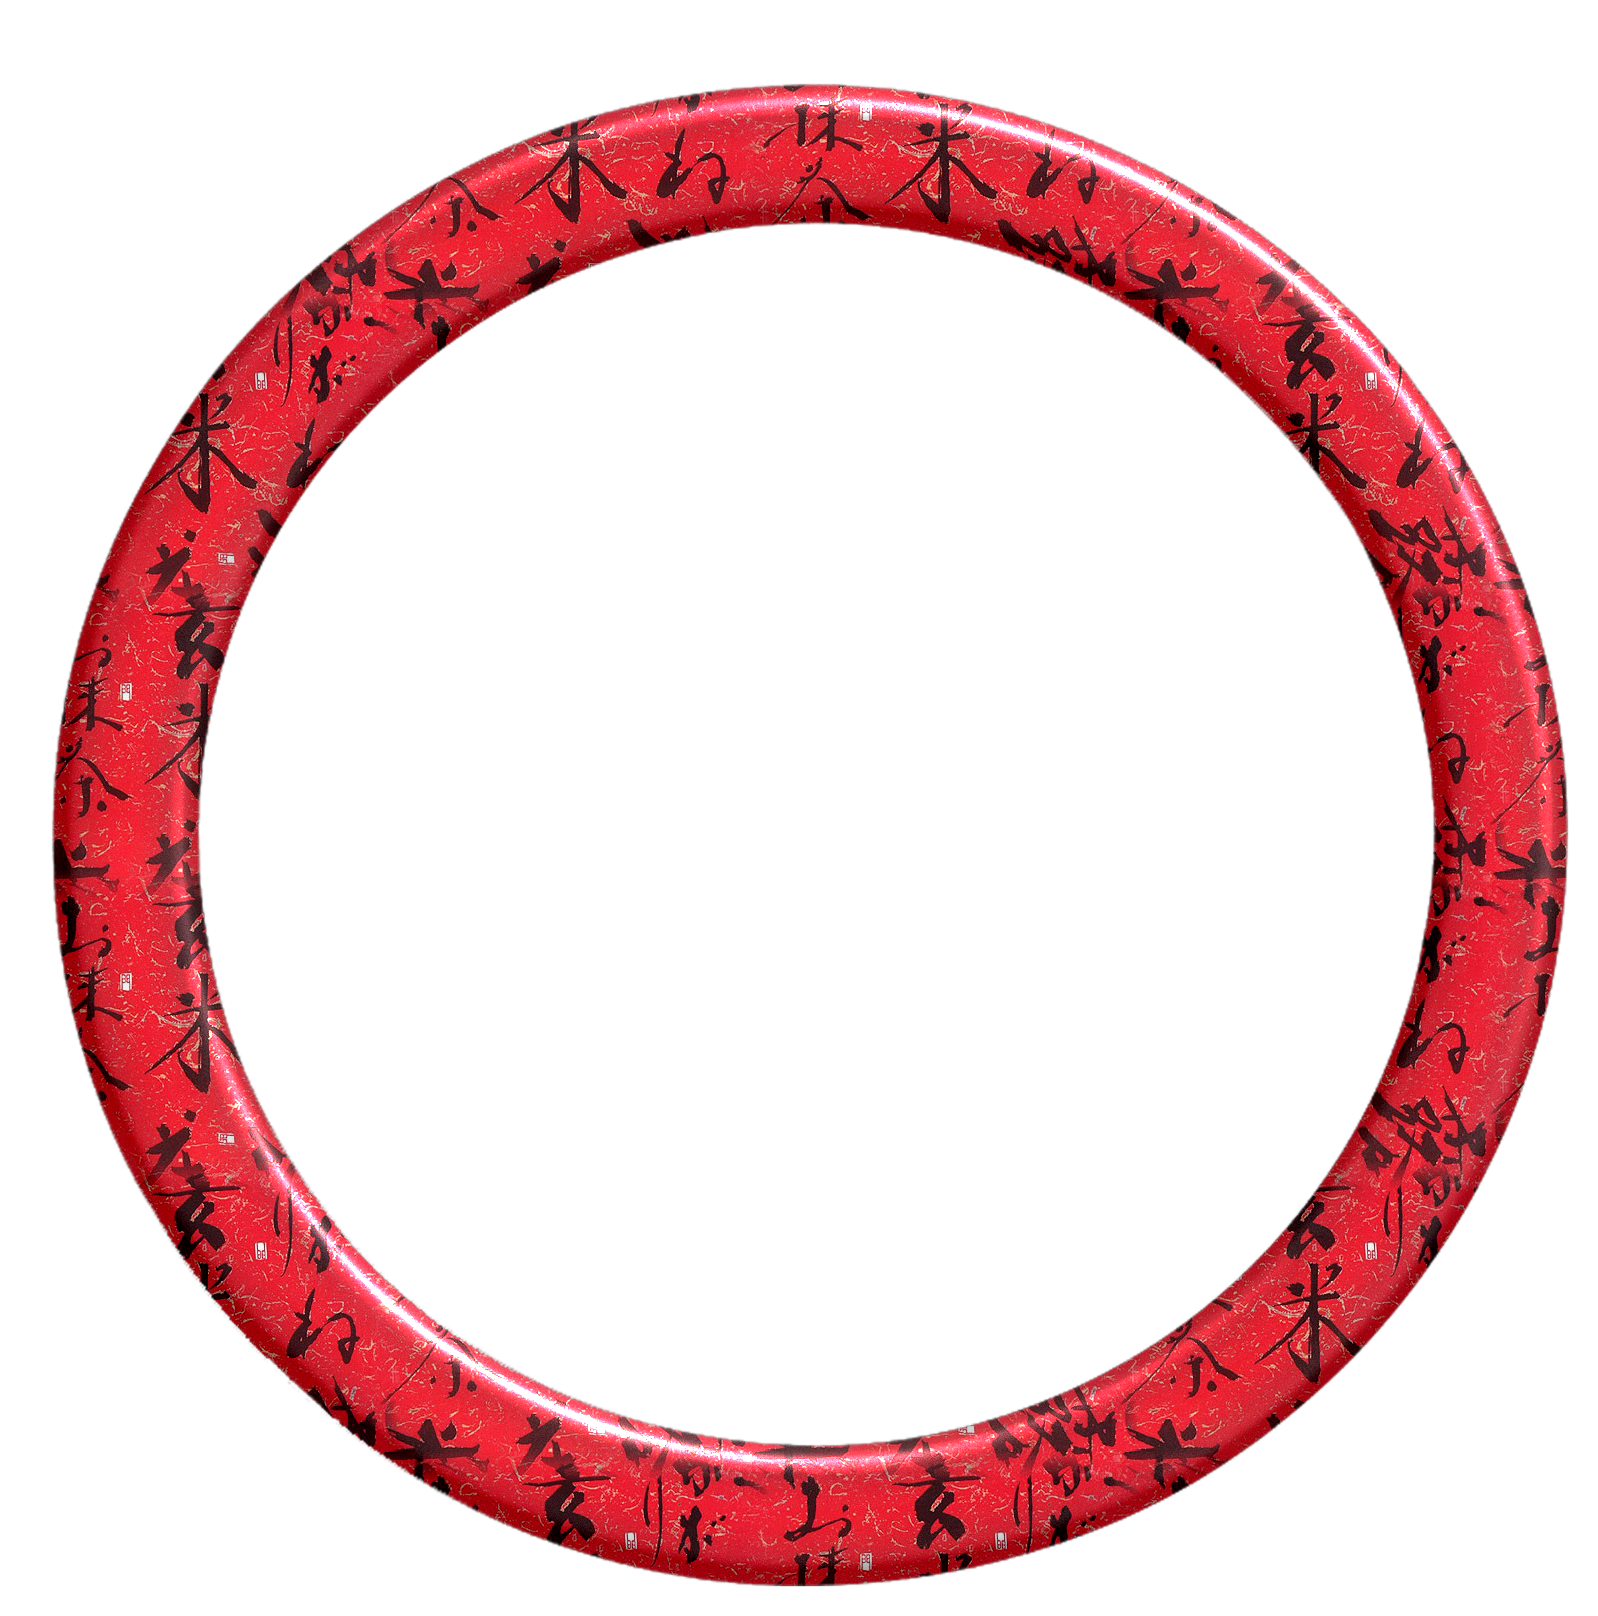 Circle Red - Red circle png download - 1598*1616 - Free Transparent